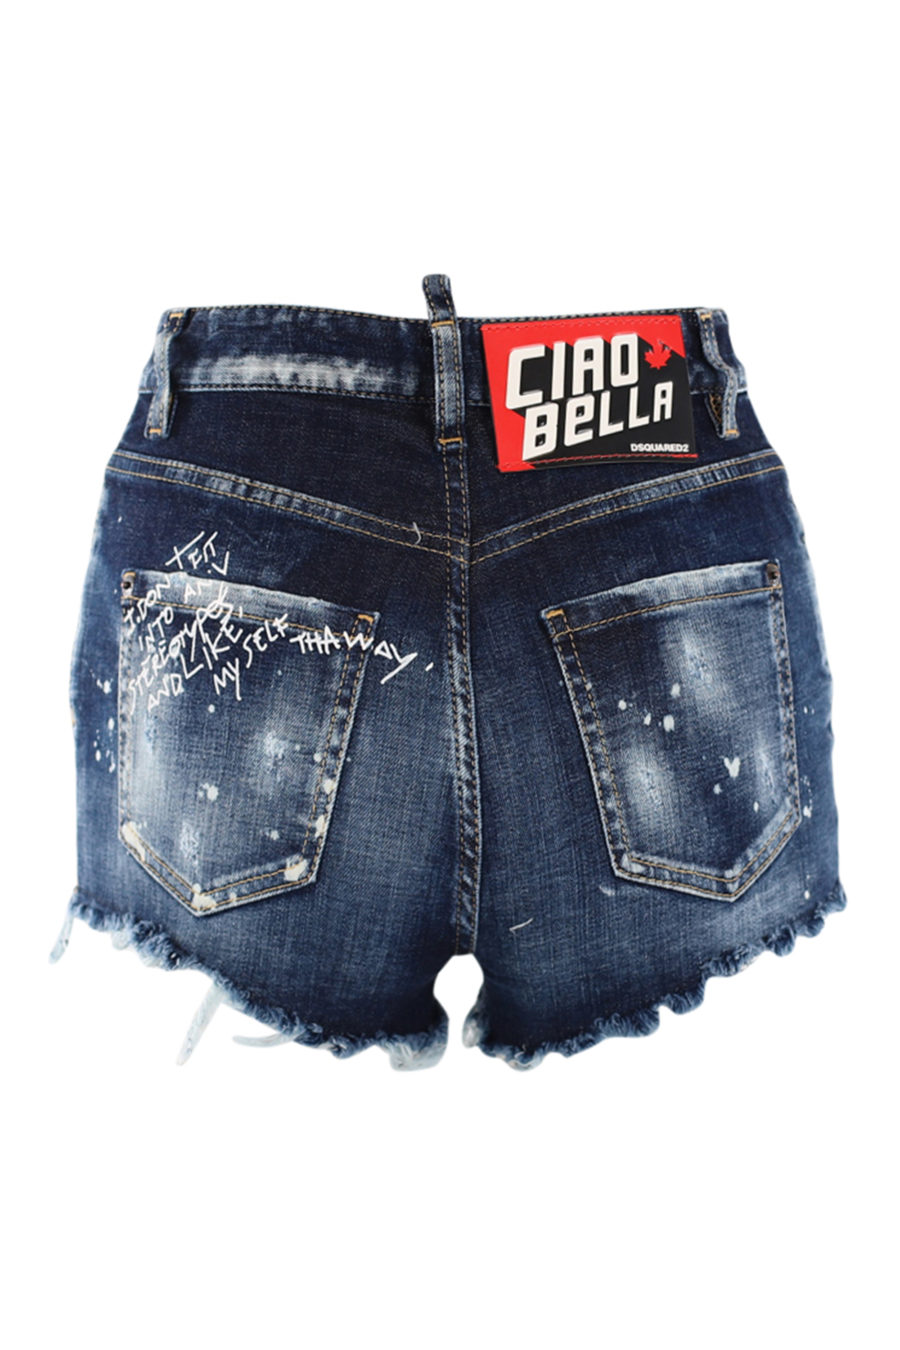 Pantalón tejano corto azul "ciao bella" - IMG 0588